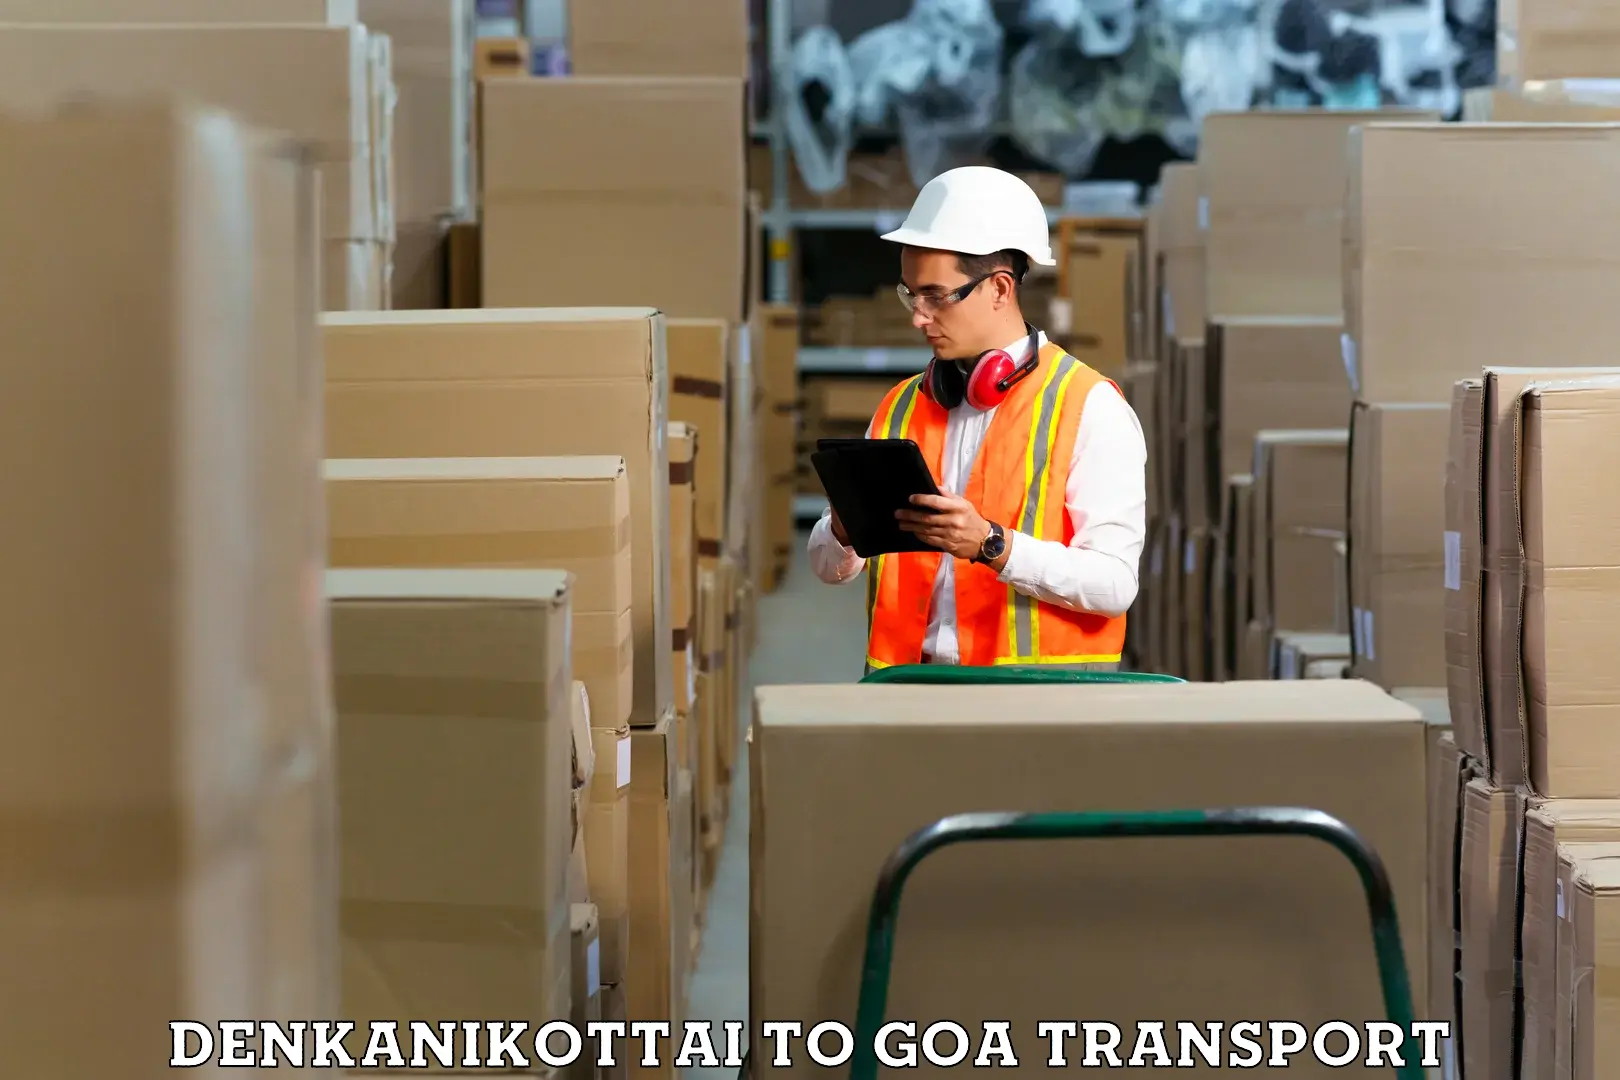 Transport bike from one state to another Denkanikottai to Goa